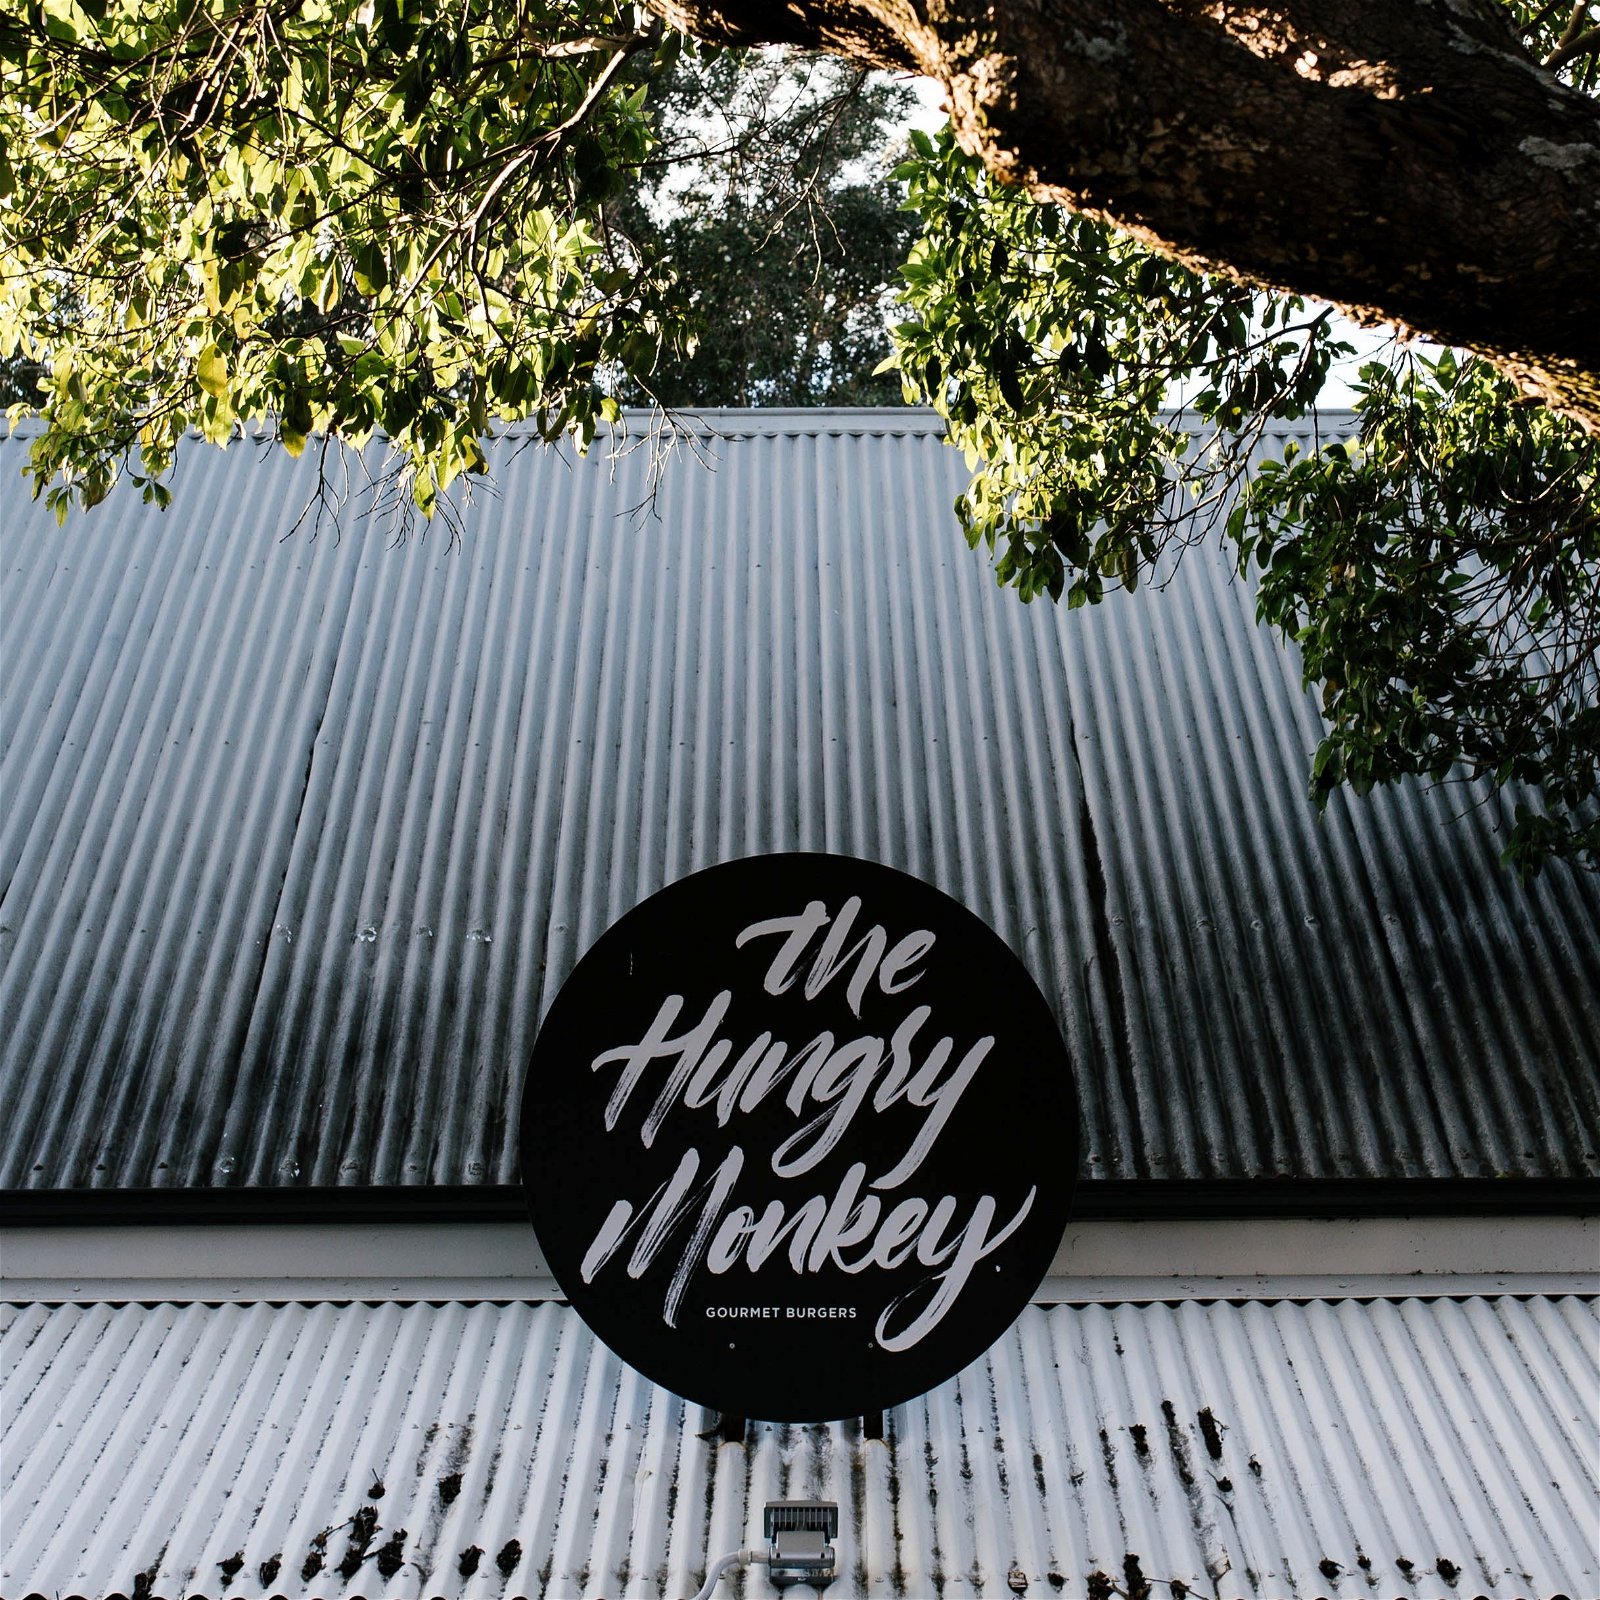 Hungry Monkey - Pubs Sydney